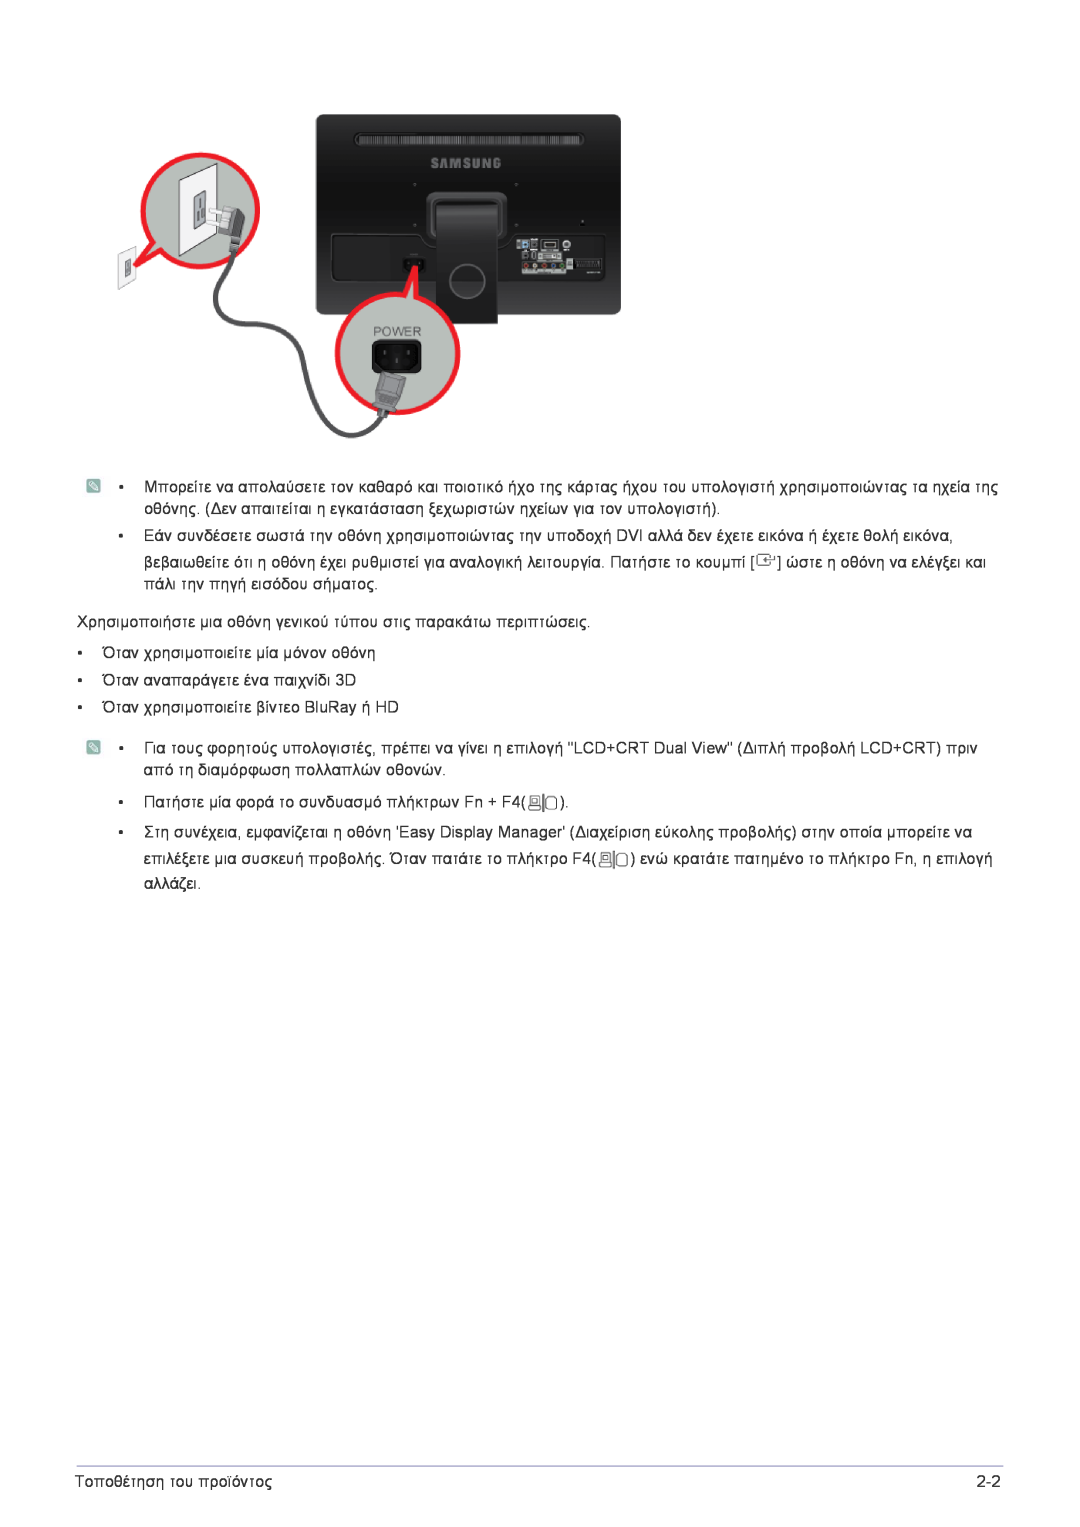 Samsung LS22FMDGF/XE manual Χρησιμοποιήστε μια οθόνη γενικού τύπου στις παρακάτω περιπτώσεις, Τοποθέτηση του προϊόντος 